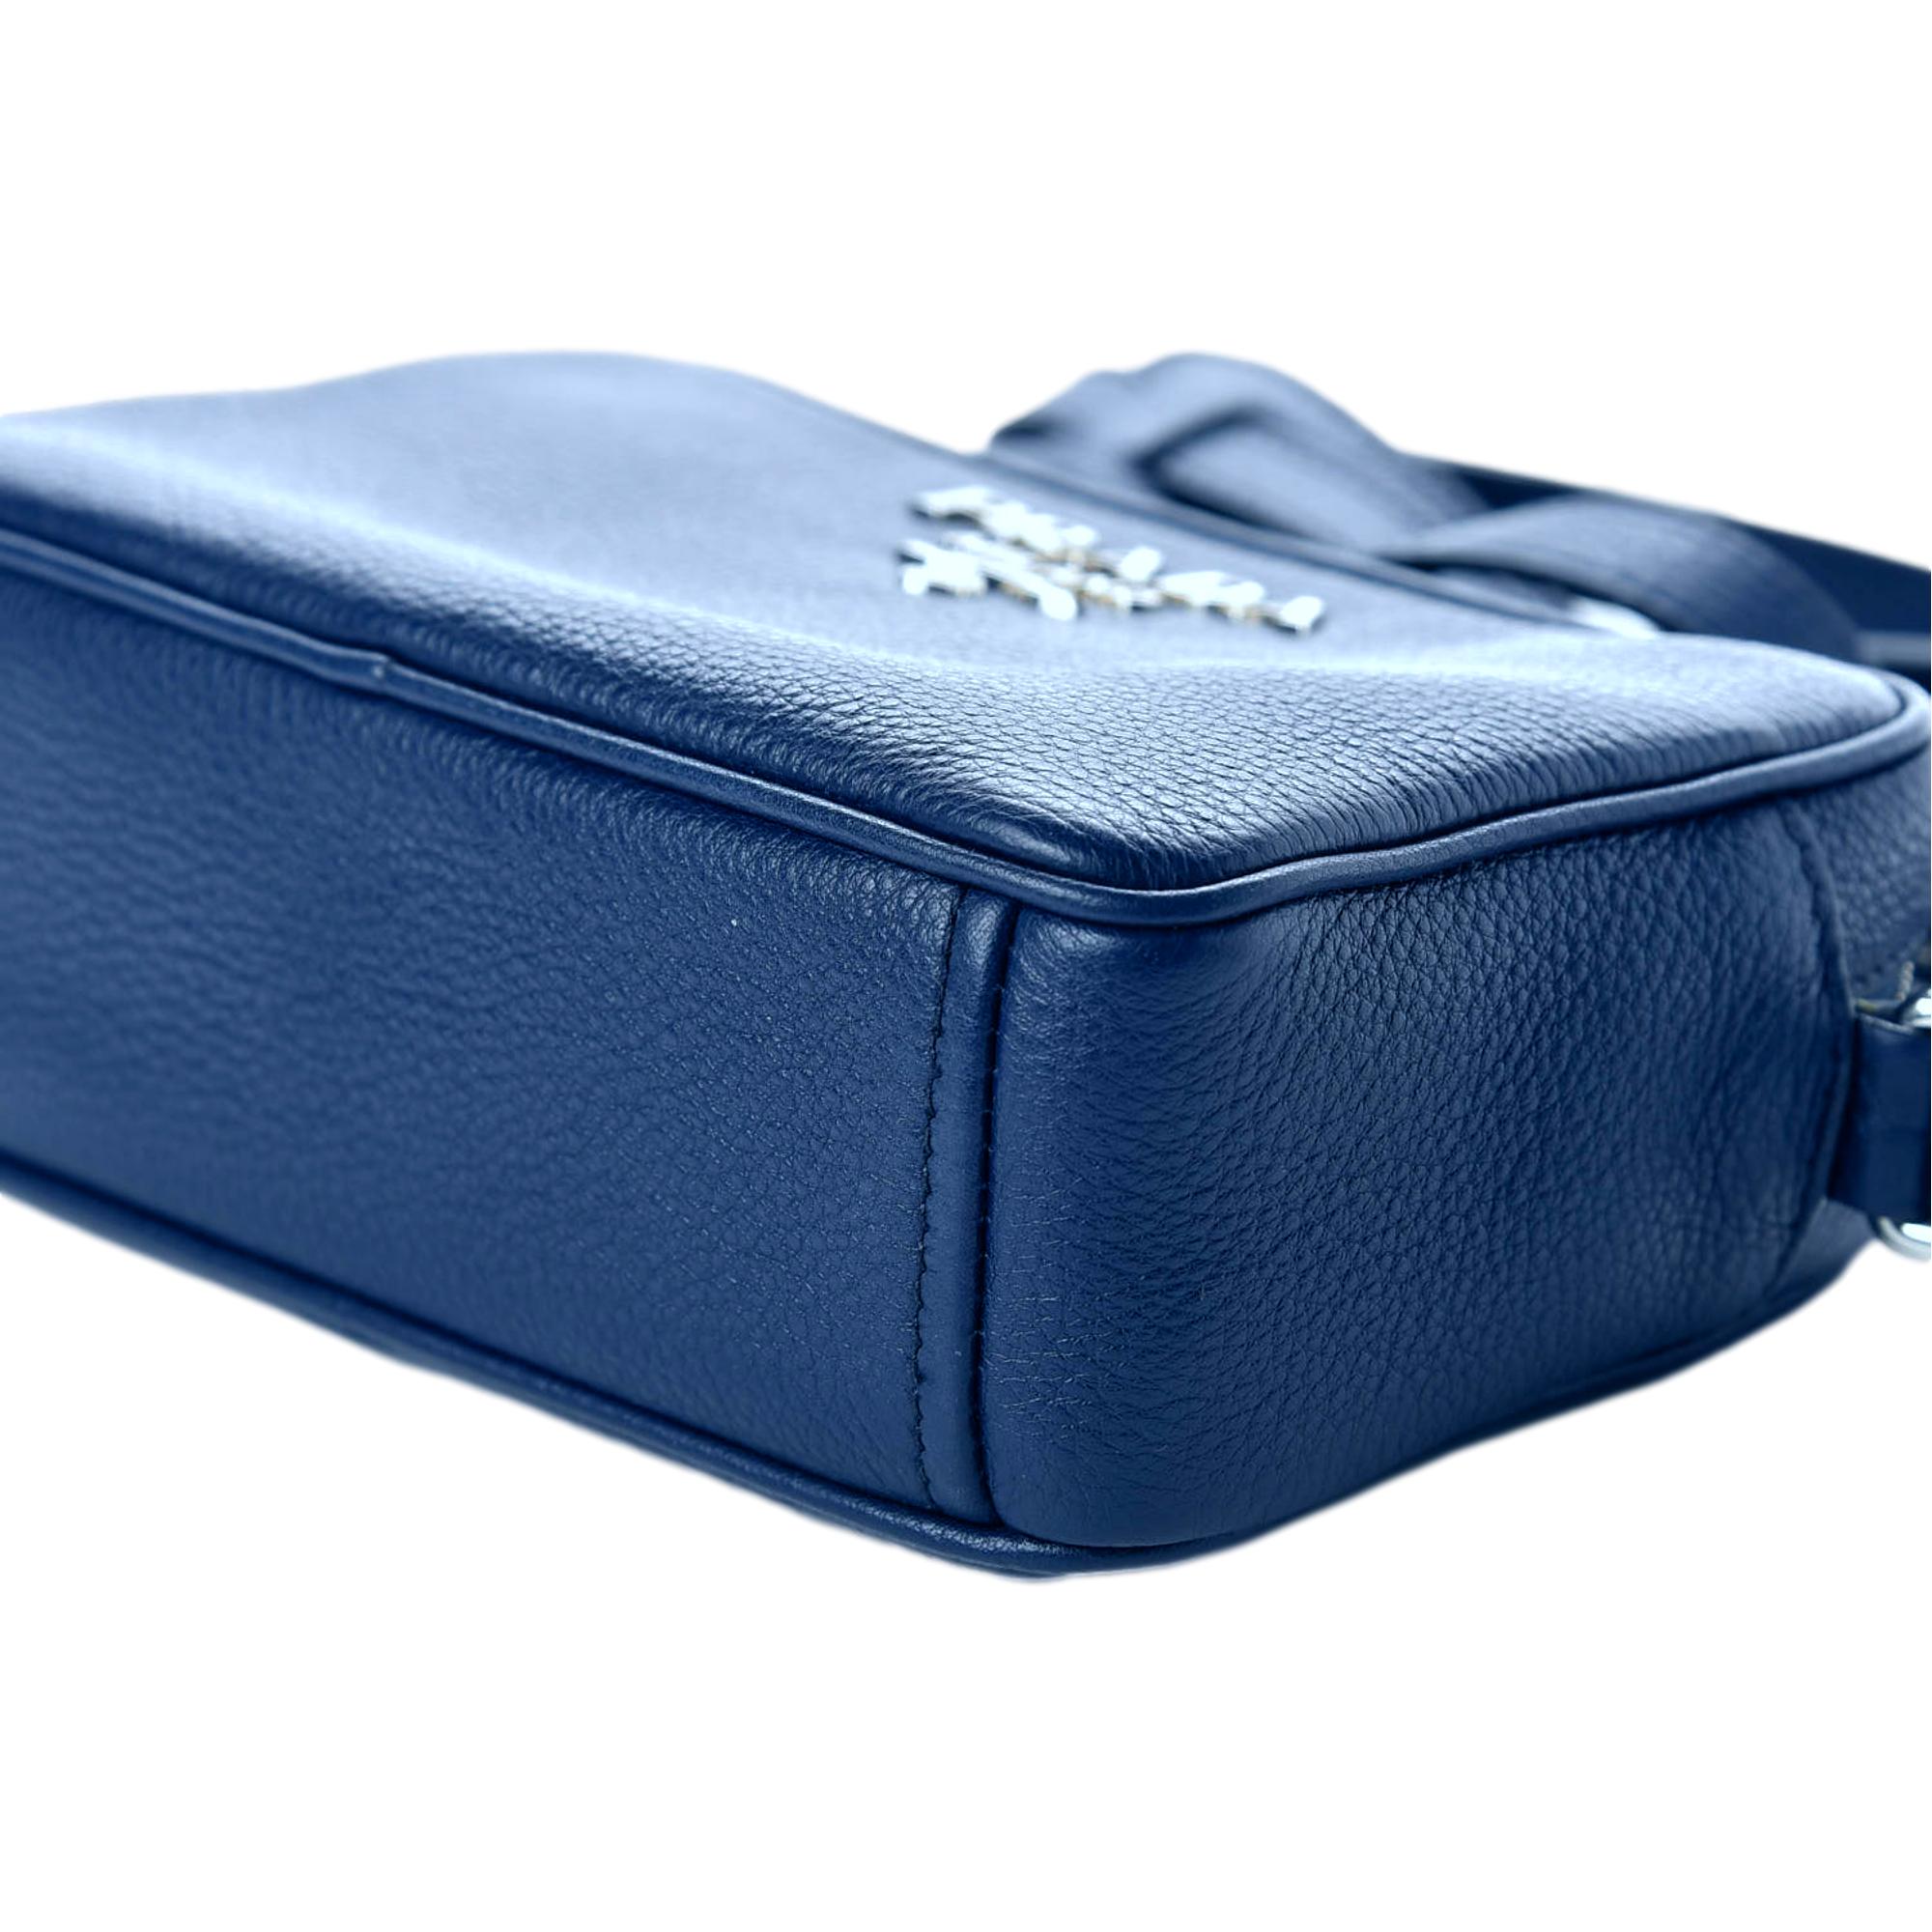 Prada Vitello Phenix Blue Leather Silver Logo Small Camera Crossbody Bag